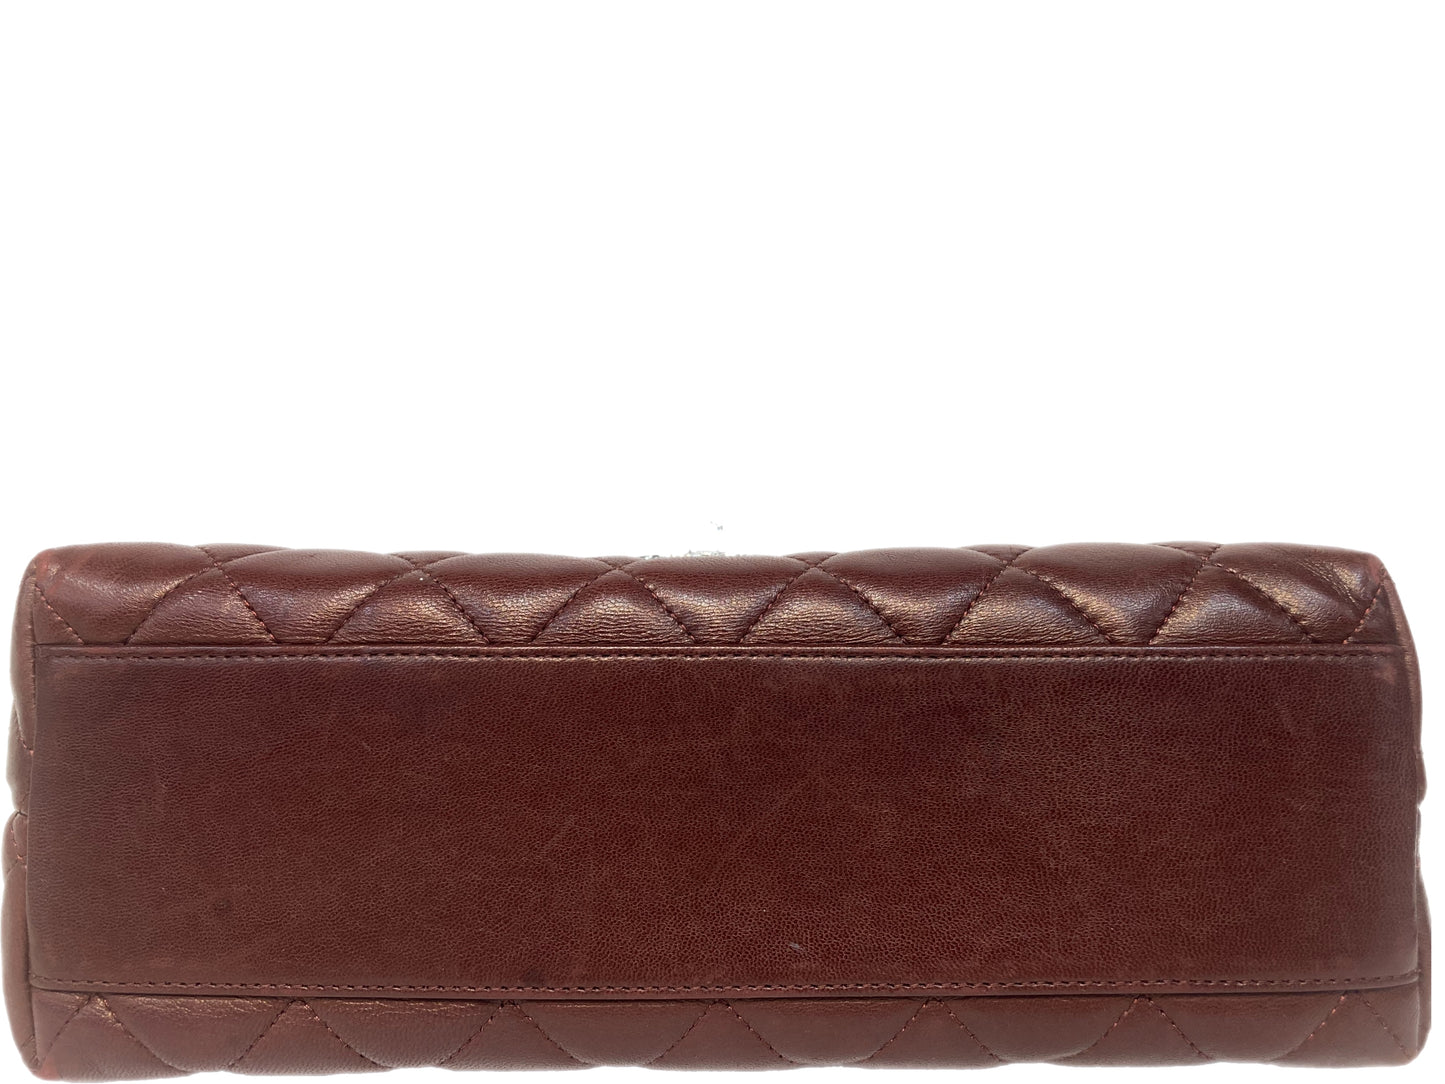 CHANEL Leather Classic Kelly Handbag Burgundy